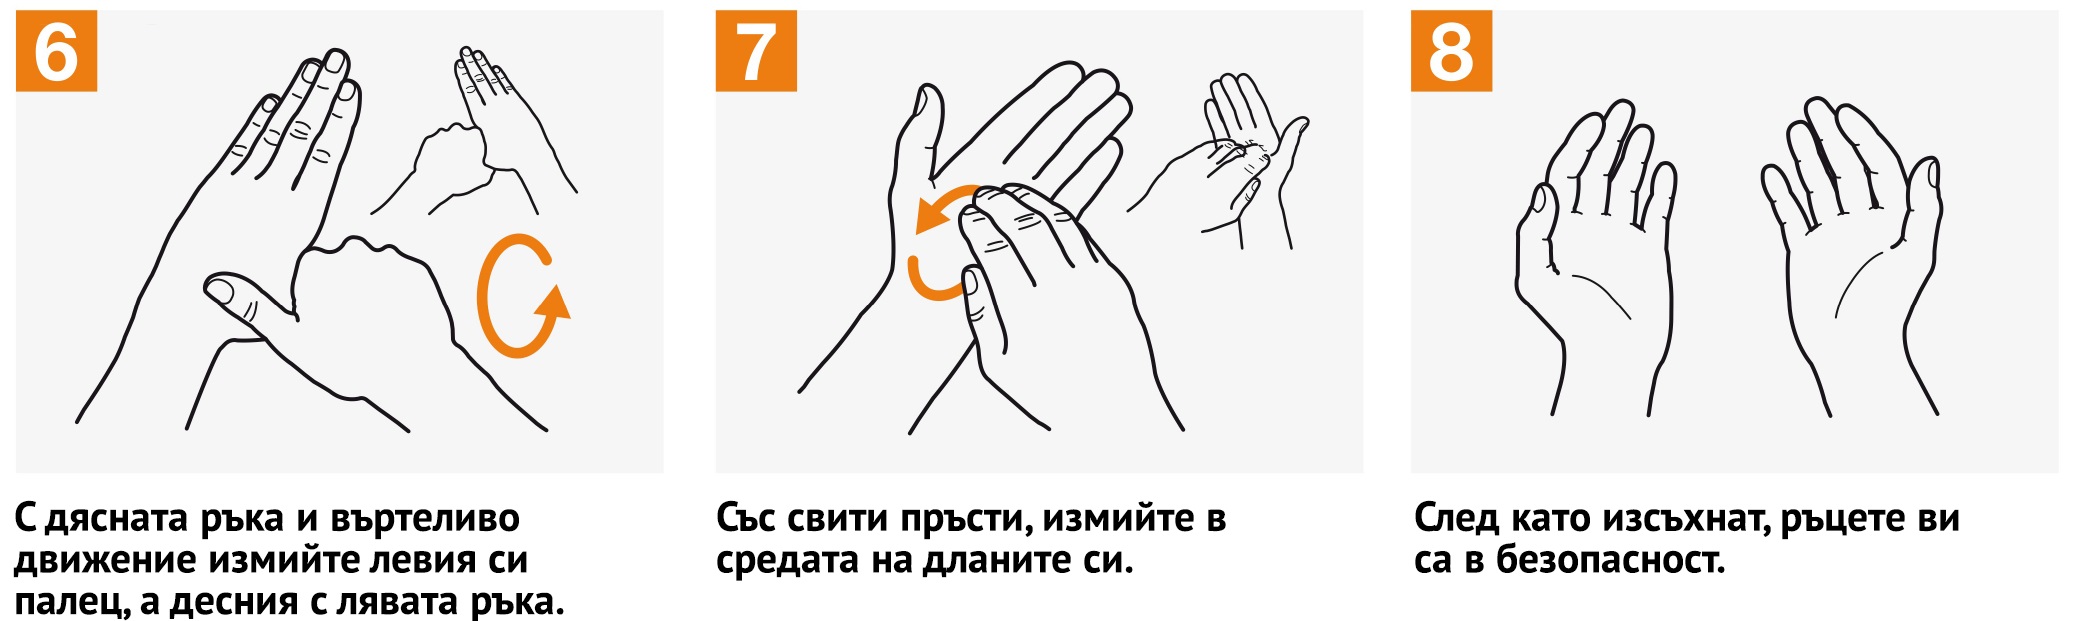 Мытье руки 111 приказу рук